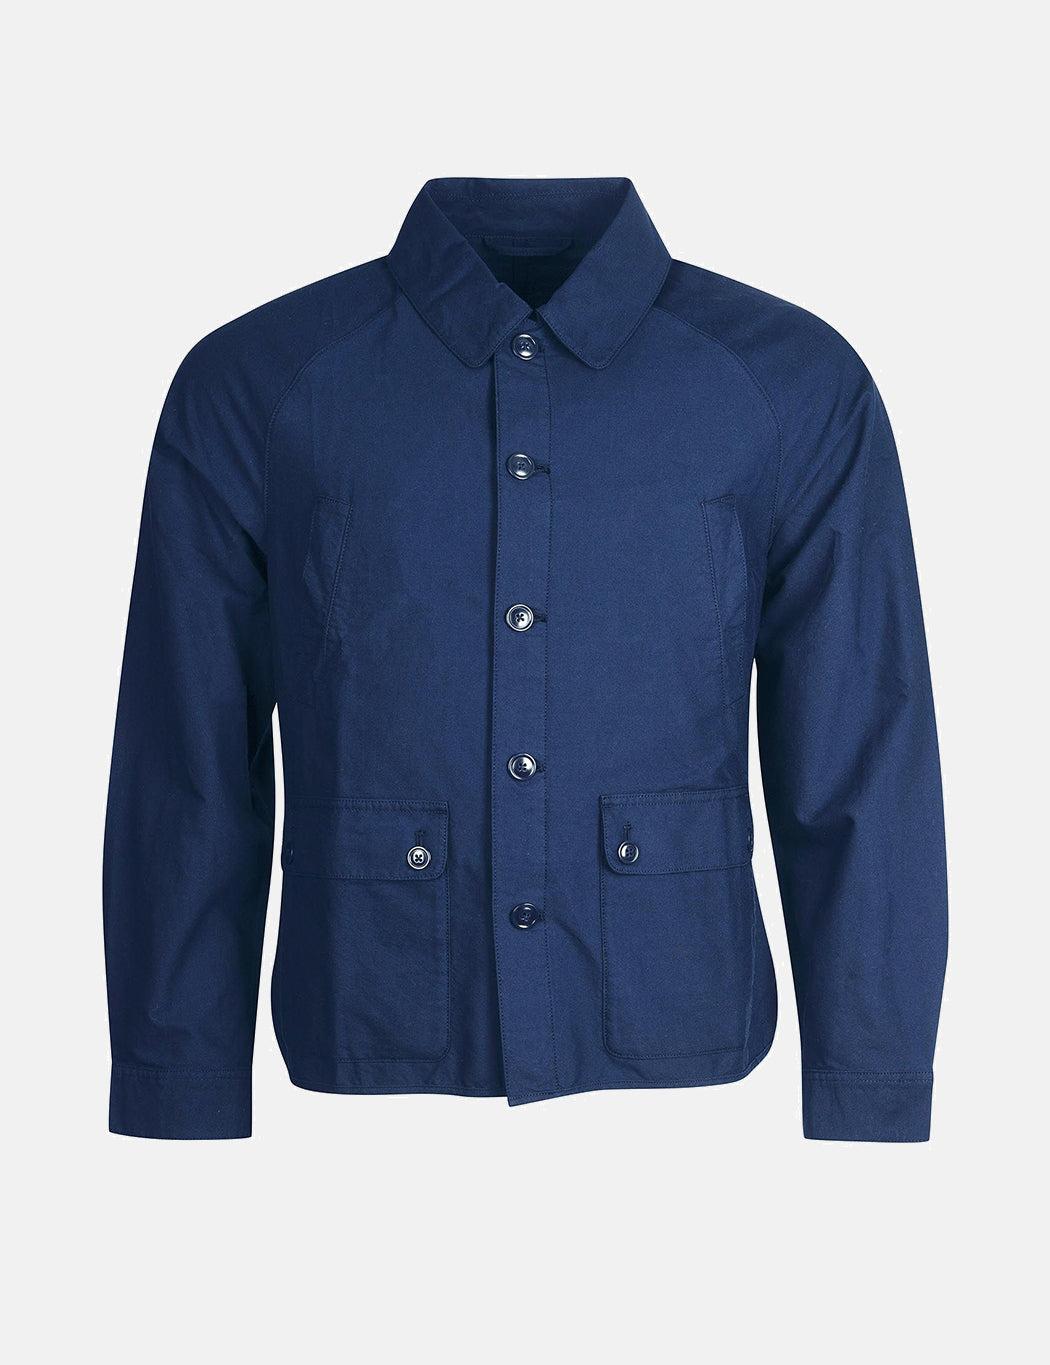 Barbour Oxford Jacket in Blue for Men | Lyst